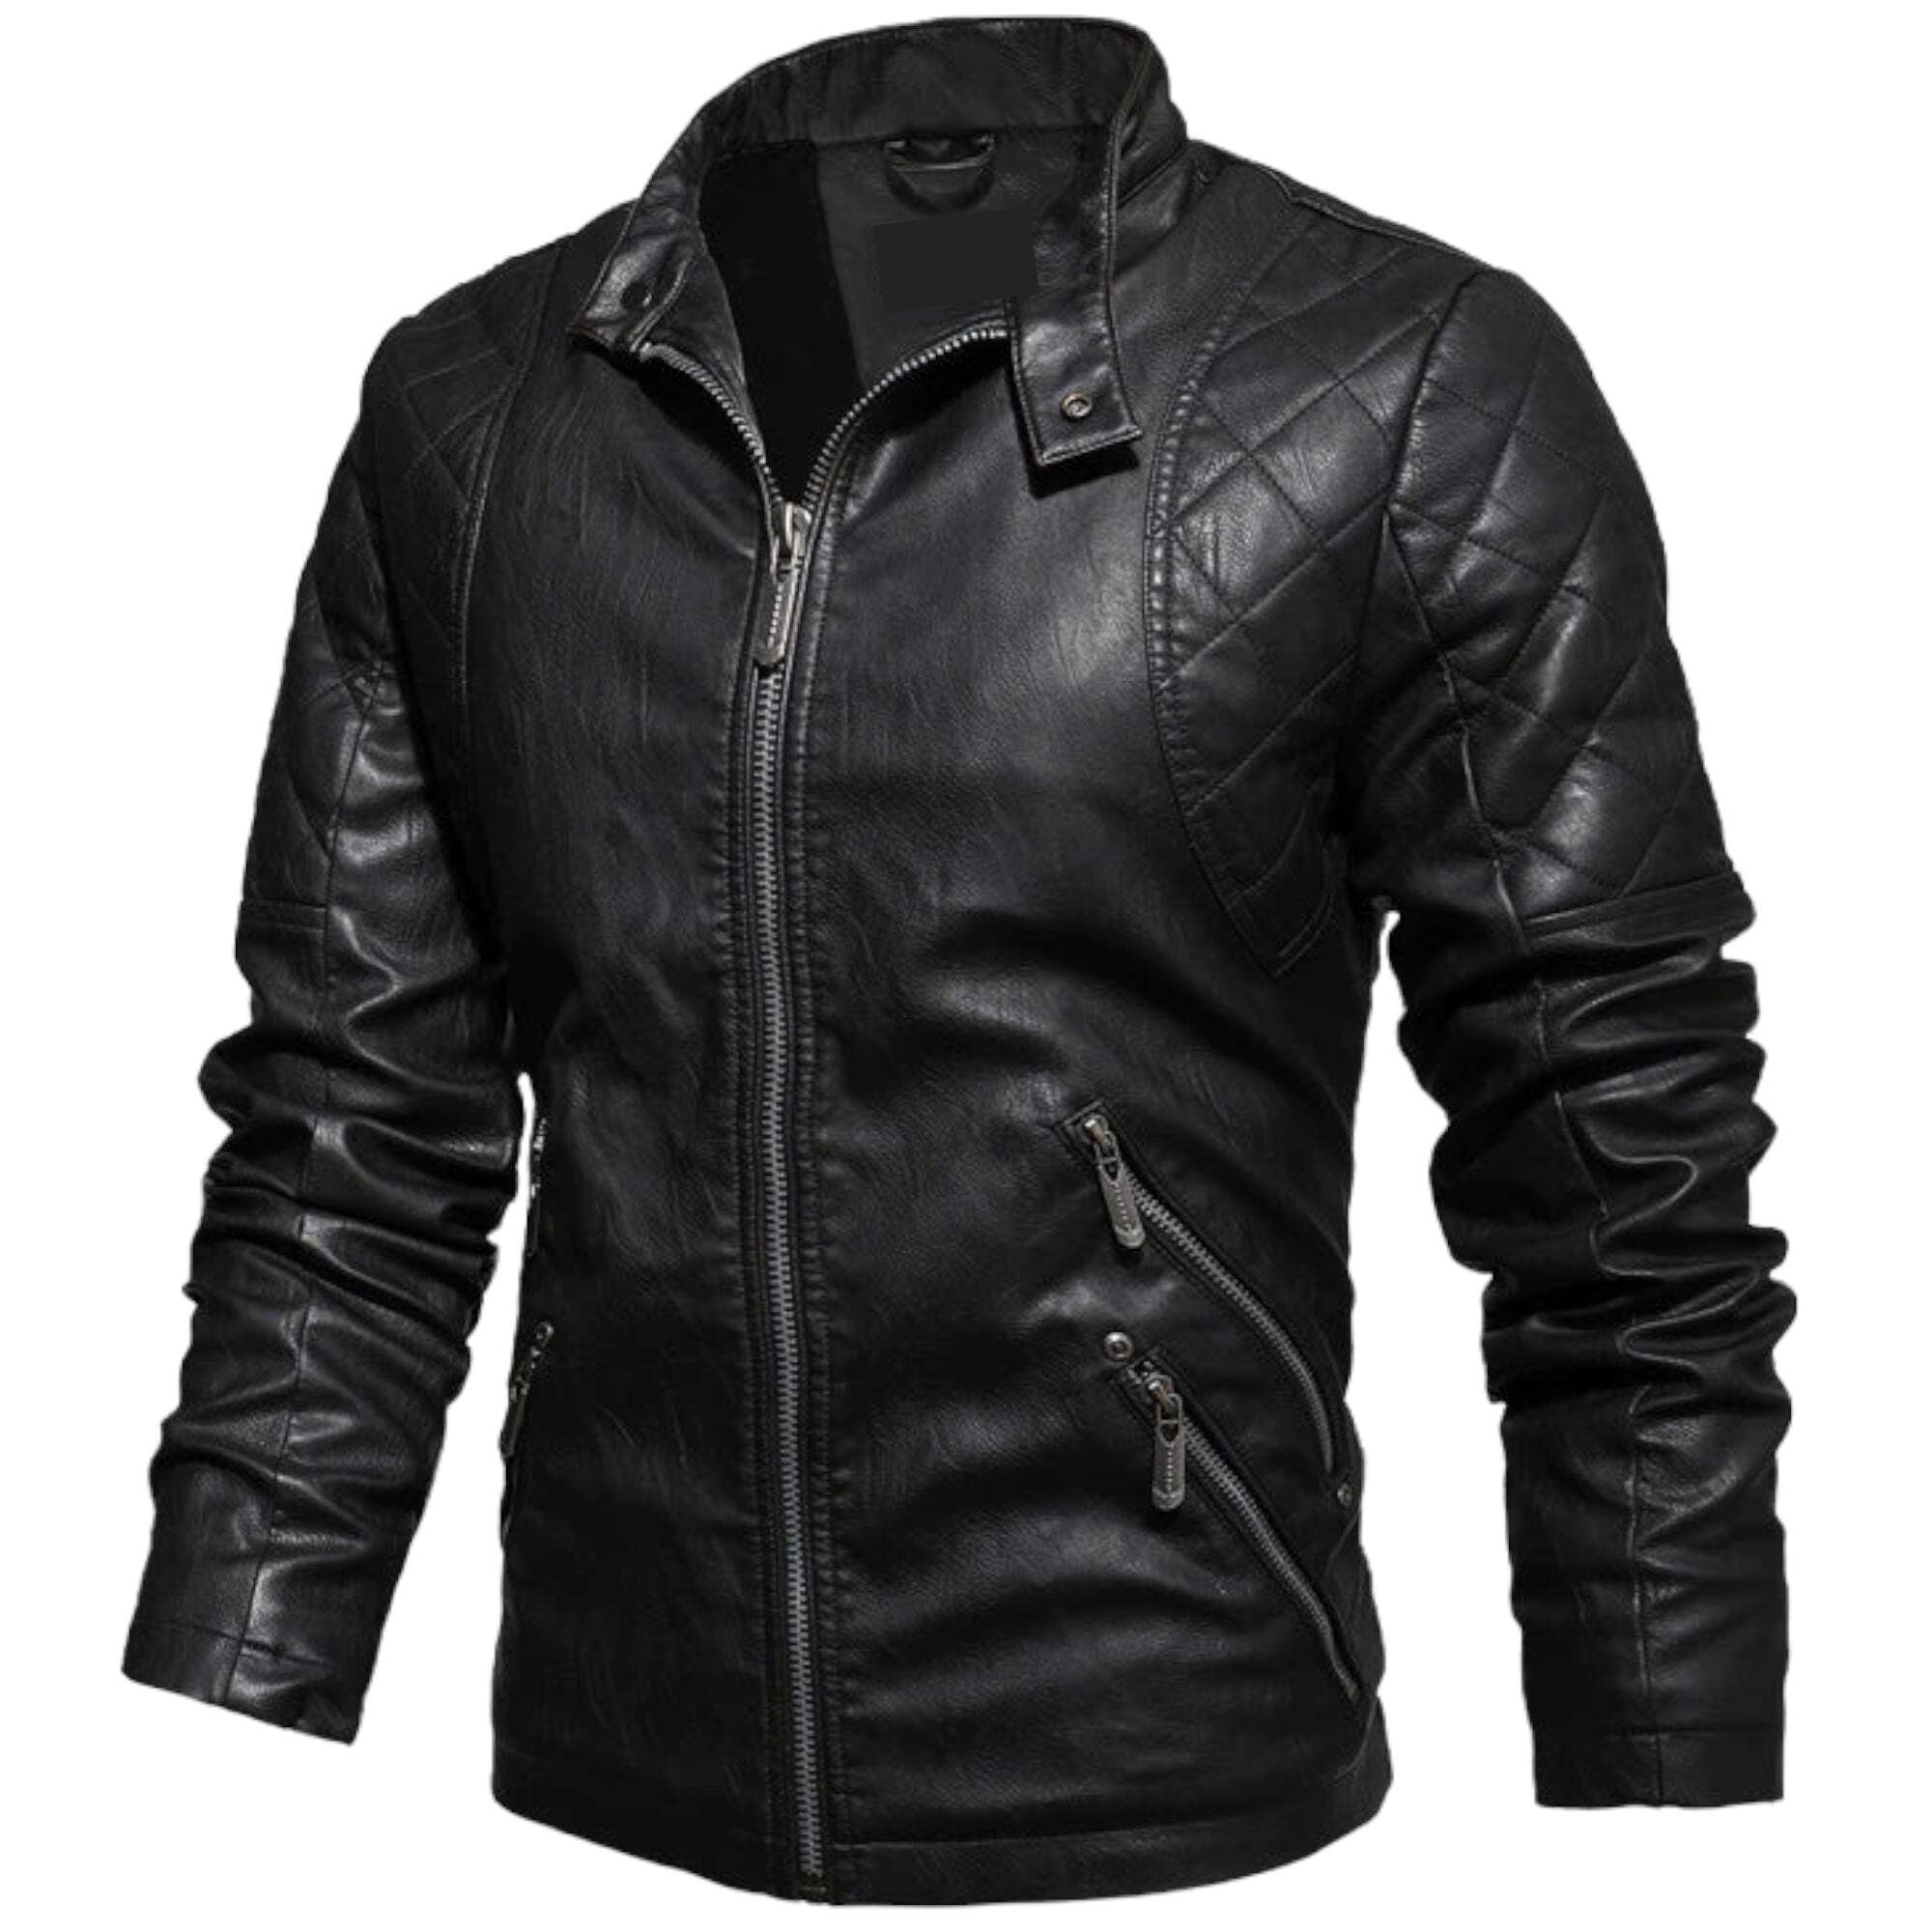 'Urban Drift' Leather Jackets